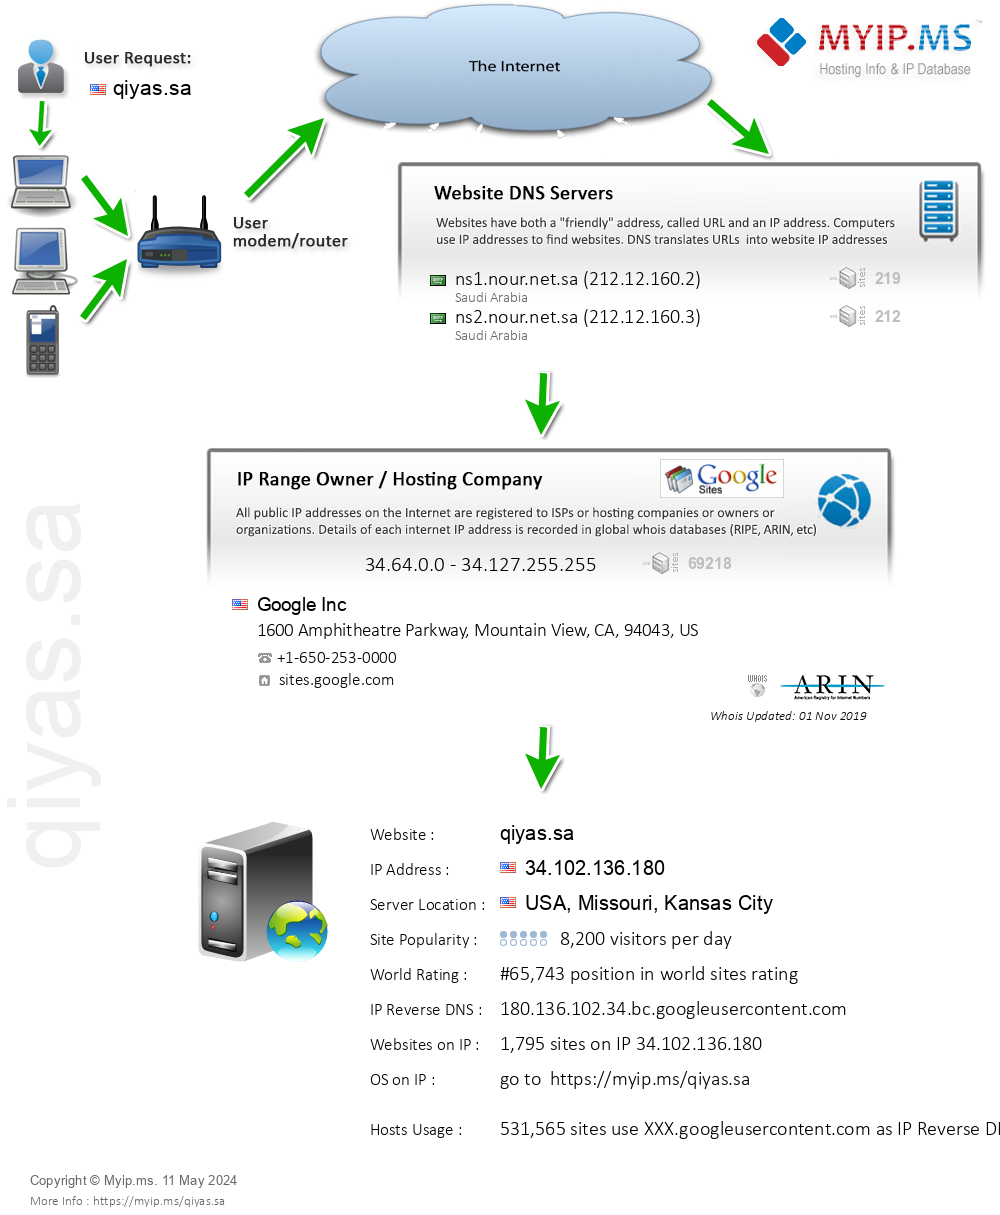 Qiyas.sa - Website Hosting Visual IP Diagram